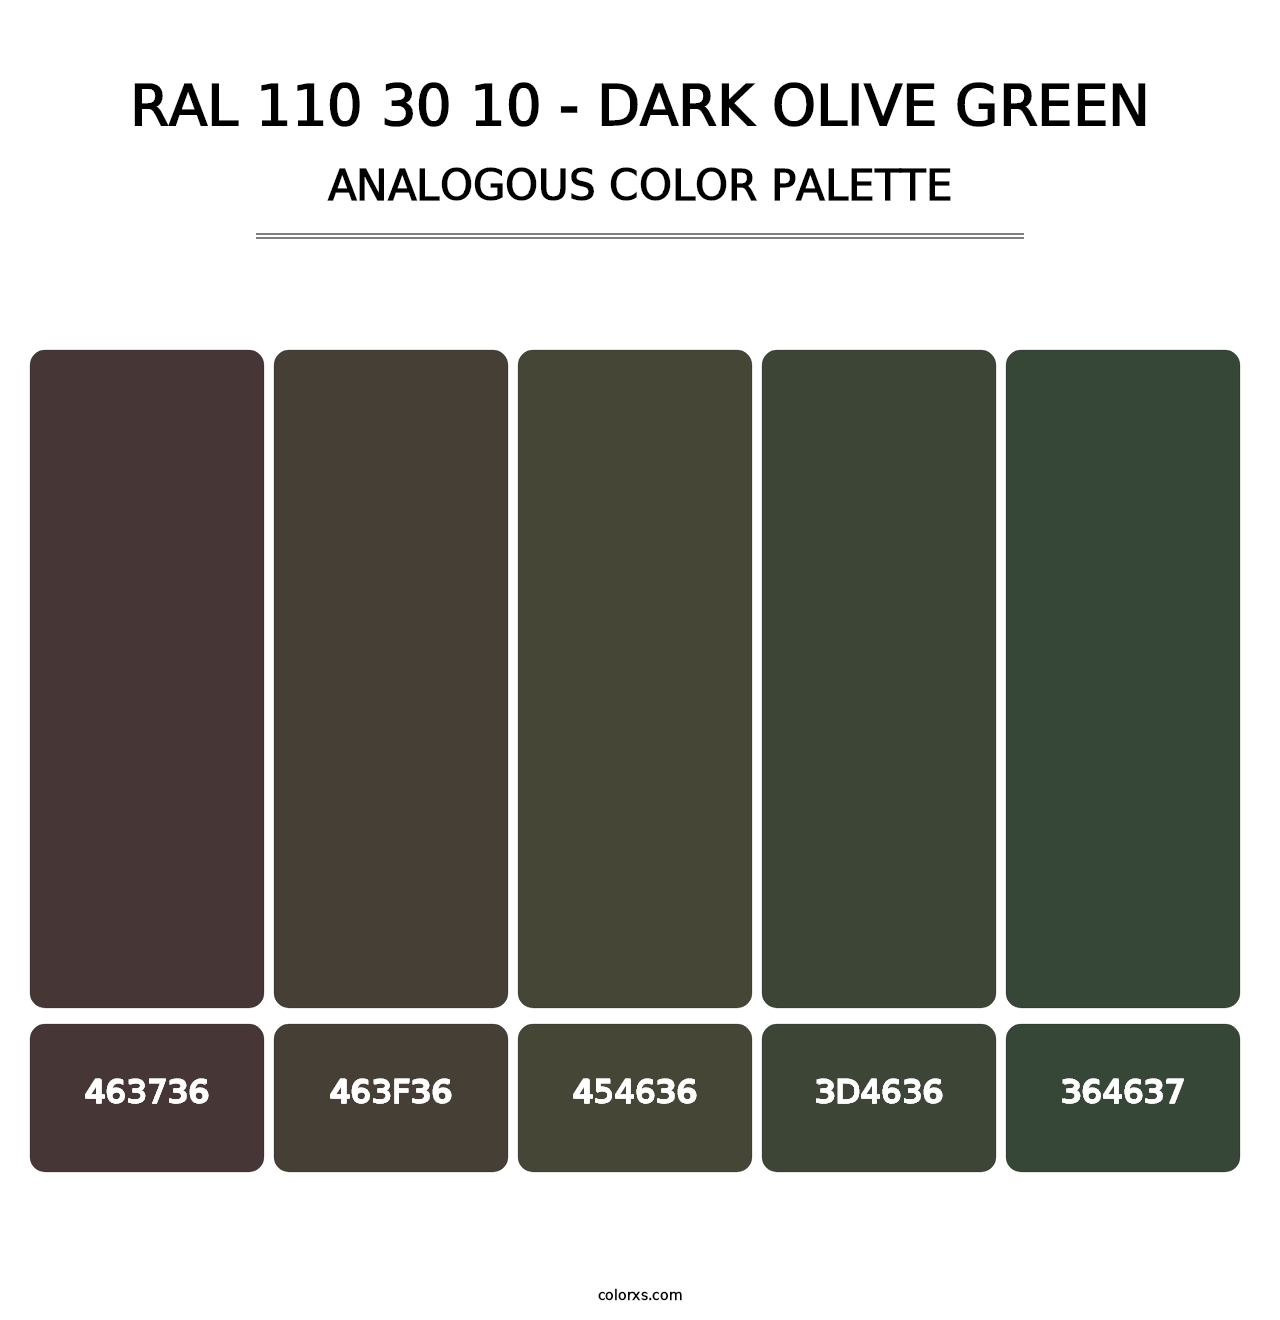 RAL 110 30 10 - Dark Olive Green - Analogous Color Palette